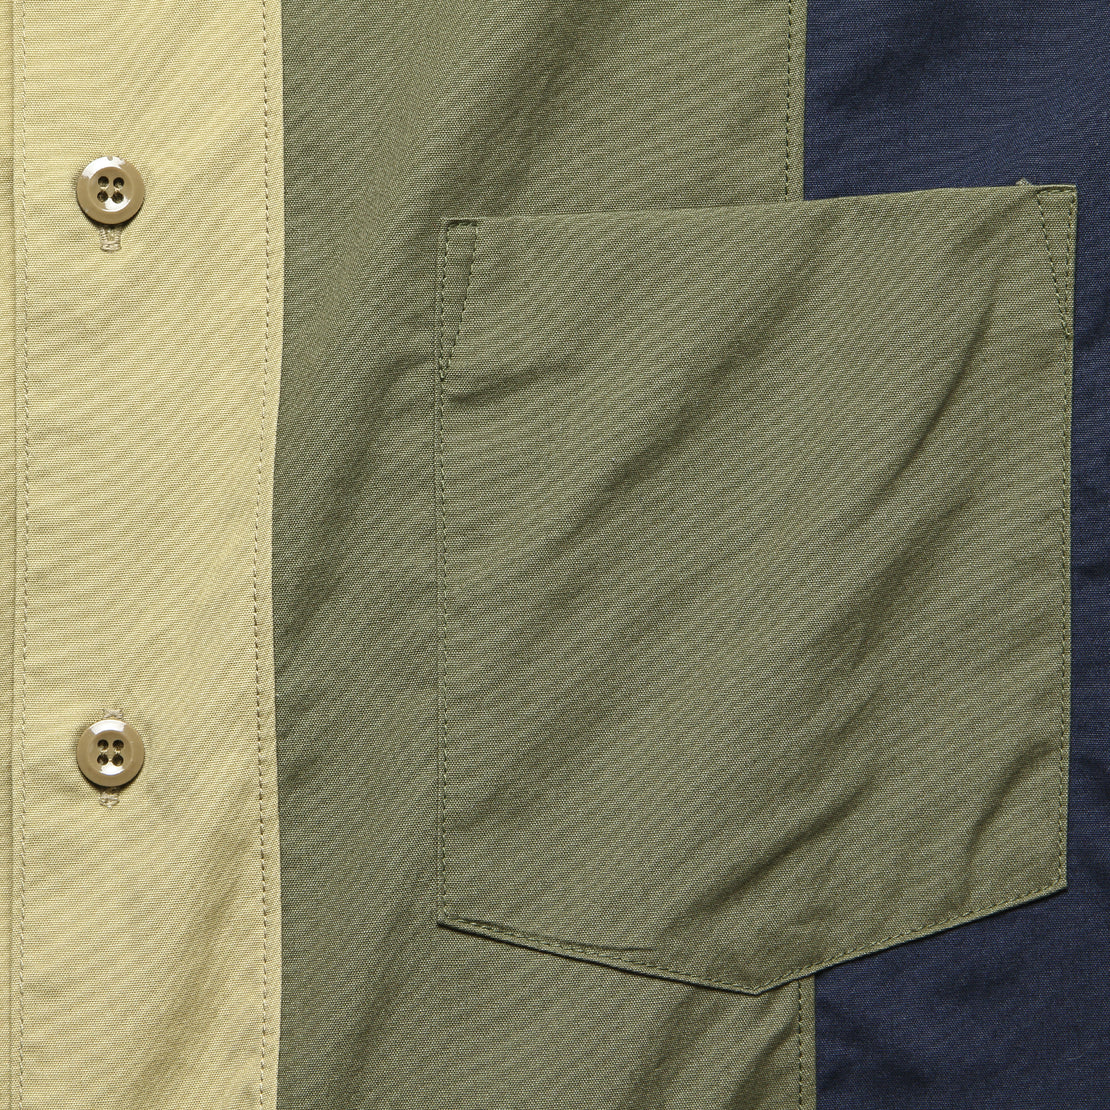 Paneled Shirt - Khaki/Olive/Navy - Monitaly - STAG Provisions - Tops - S/S Woven - Stripe